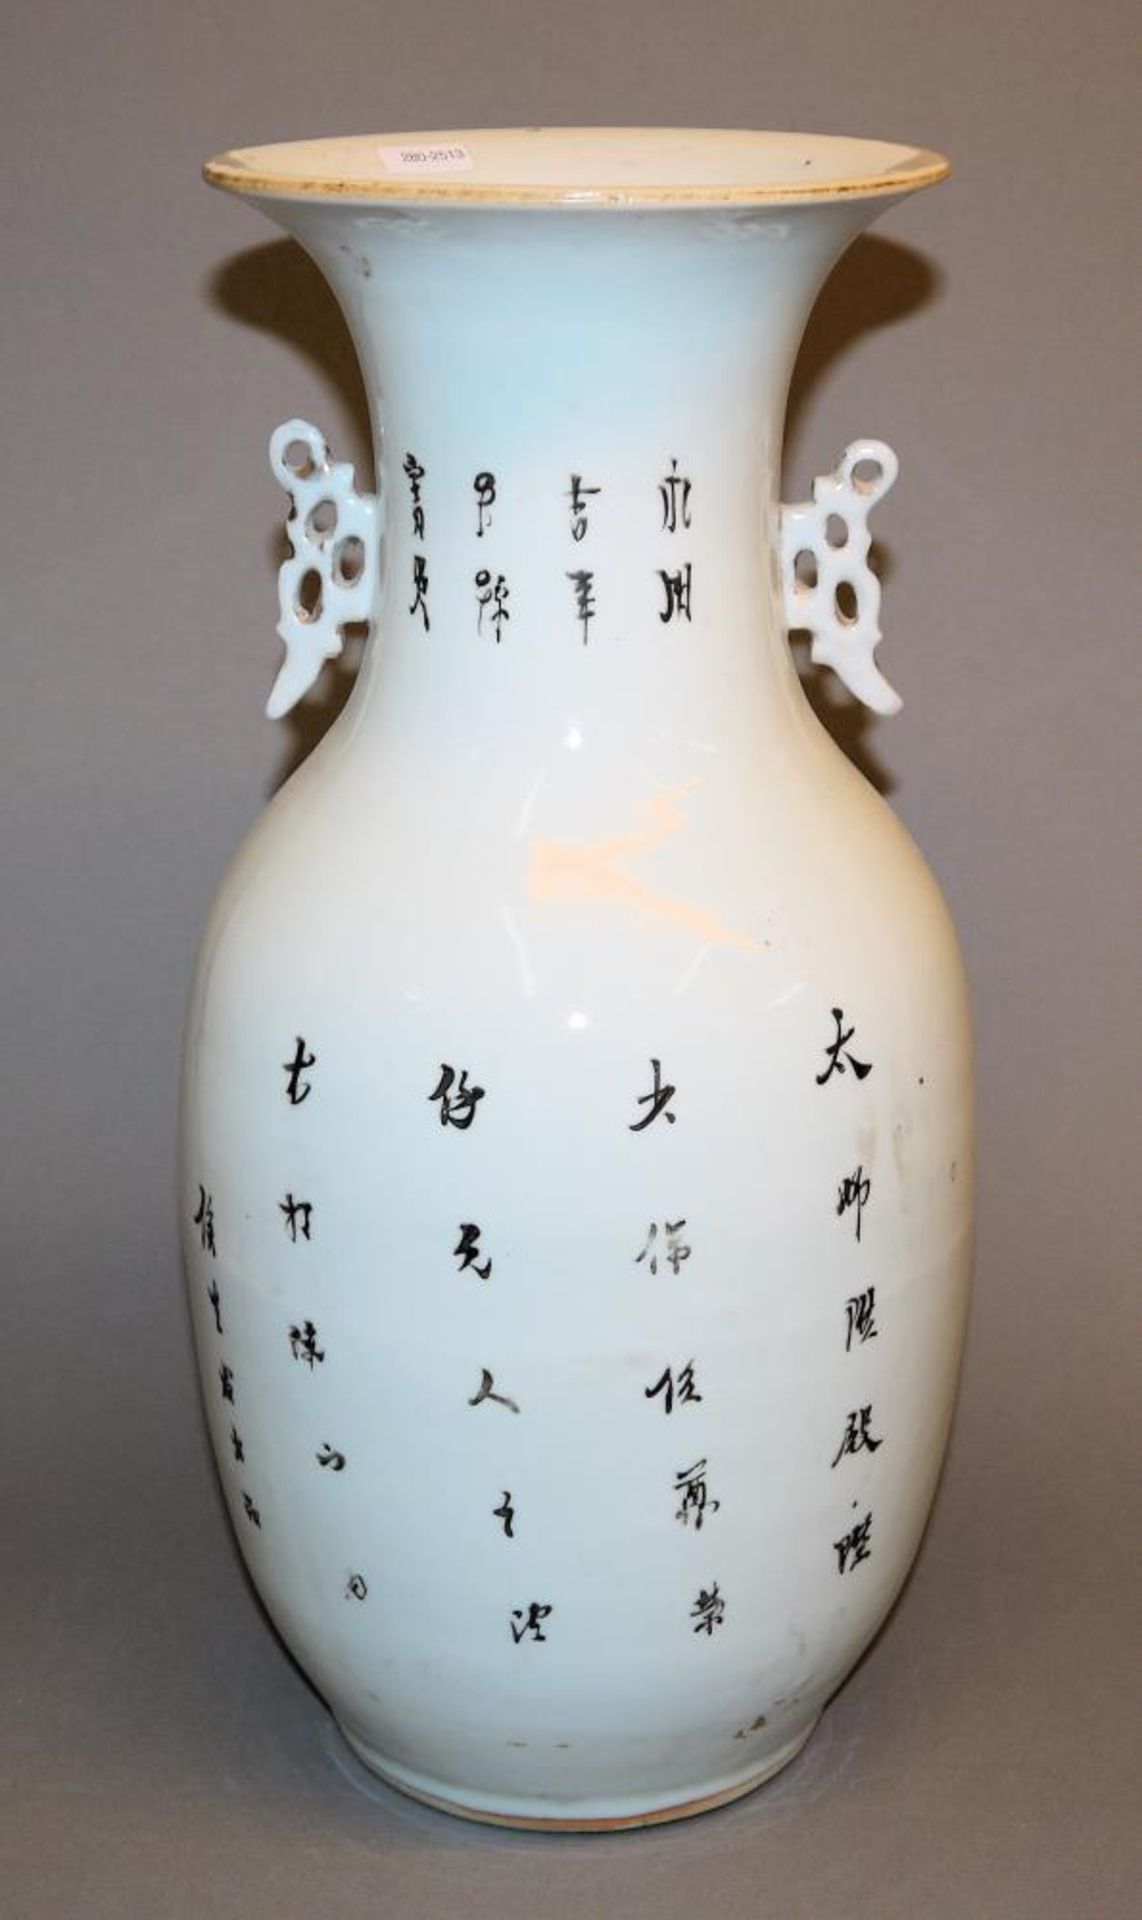 Große Balustervase mit rotem Shishi, späte Qing/Republik-Zeit, China 19./20. Jh. Porzellanvase mit - Image 2 of 2